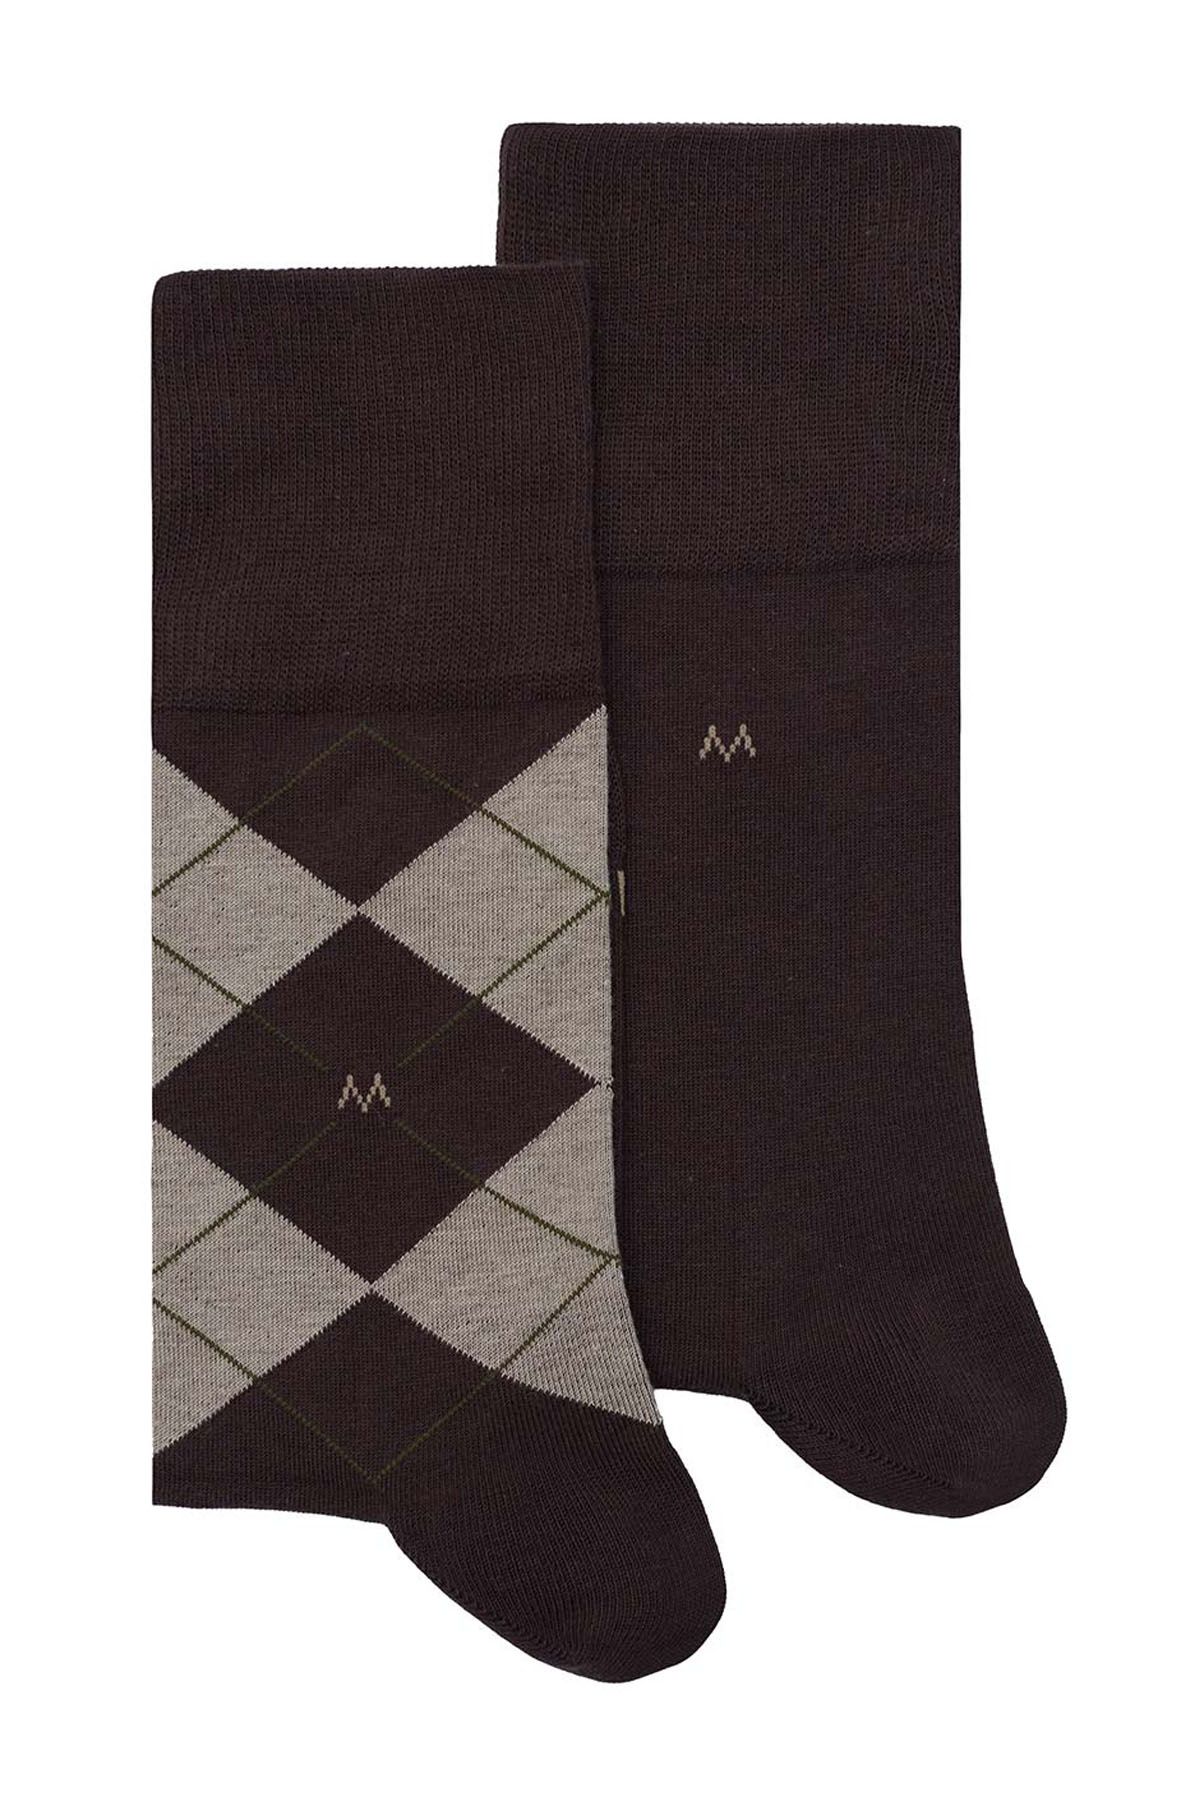 Hemington Baklava Desenli Kahverengi Pamuk Ikili Çorap Seti